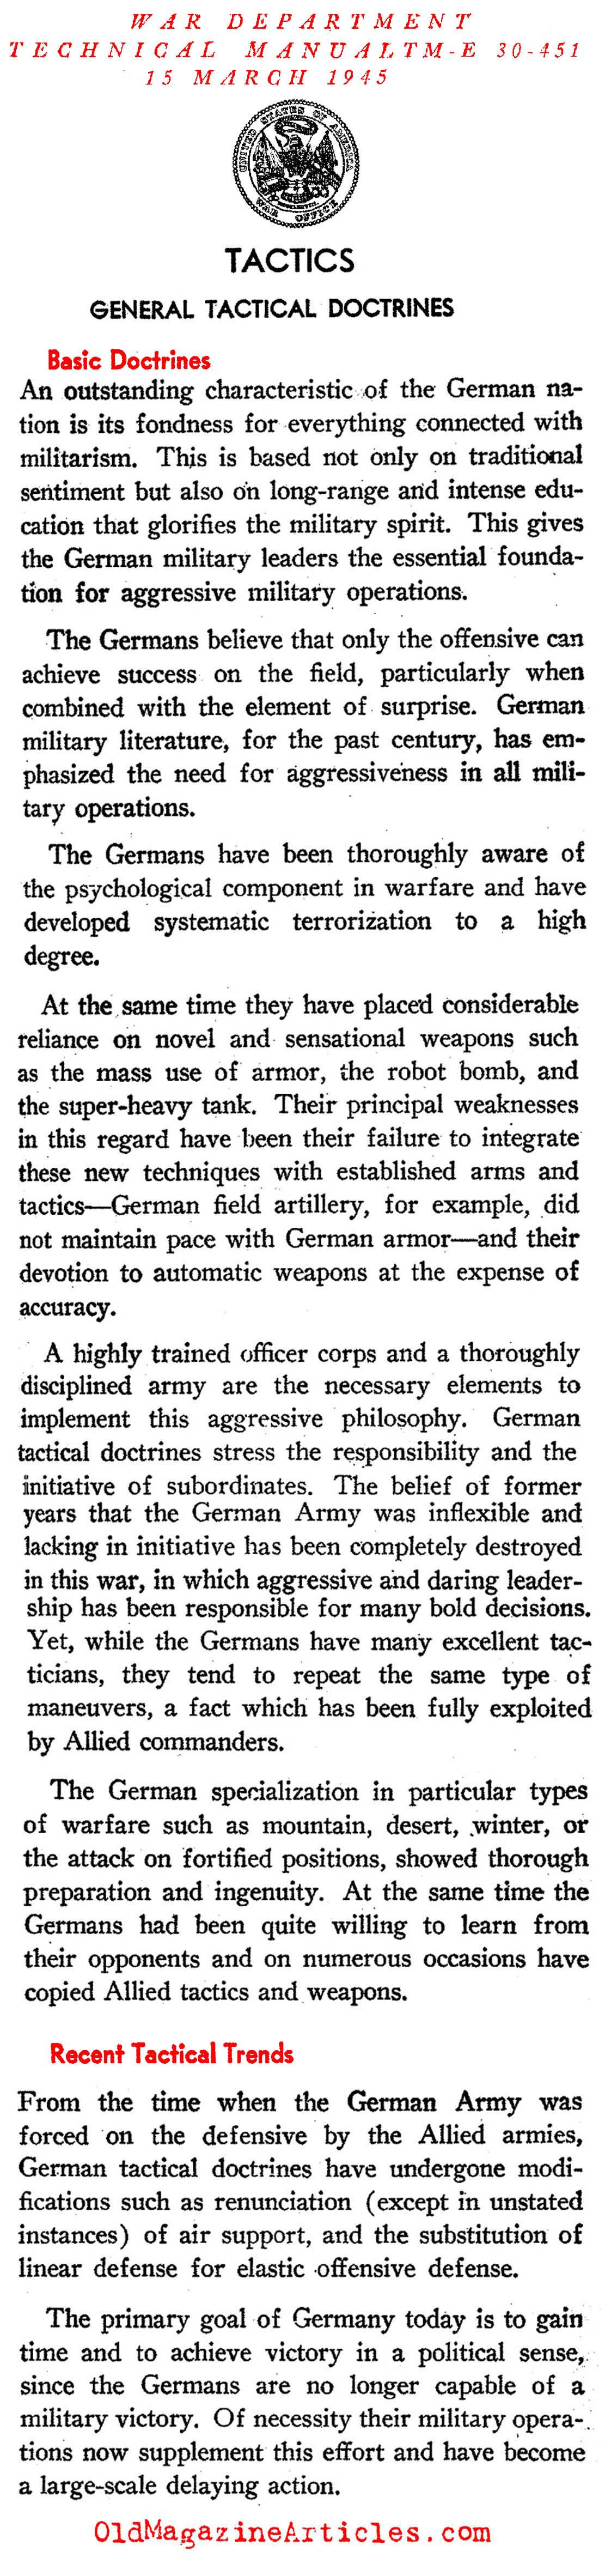 A Study of the German Tactical Doctrine  (U.S. Dept. of War, 1945)